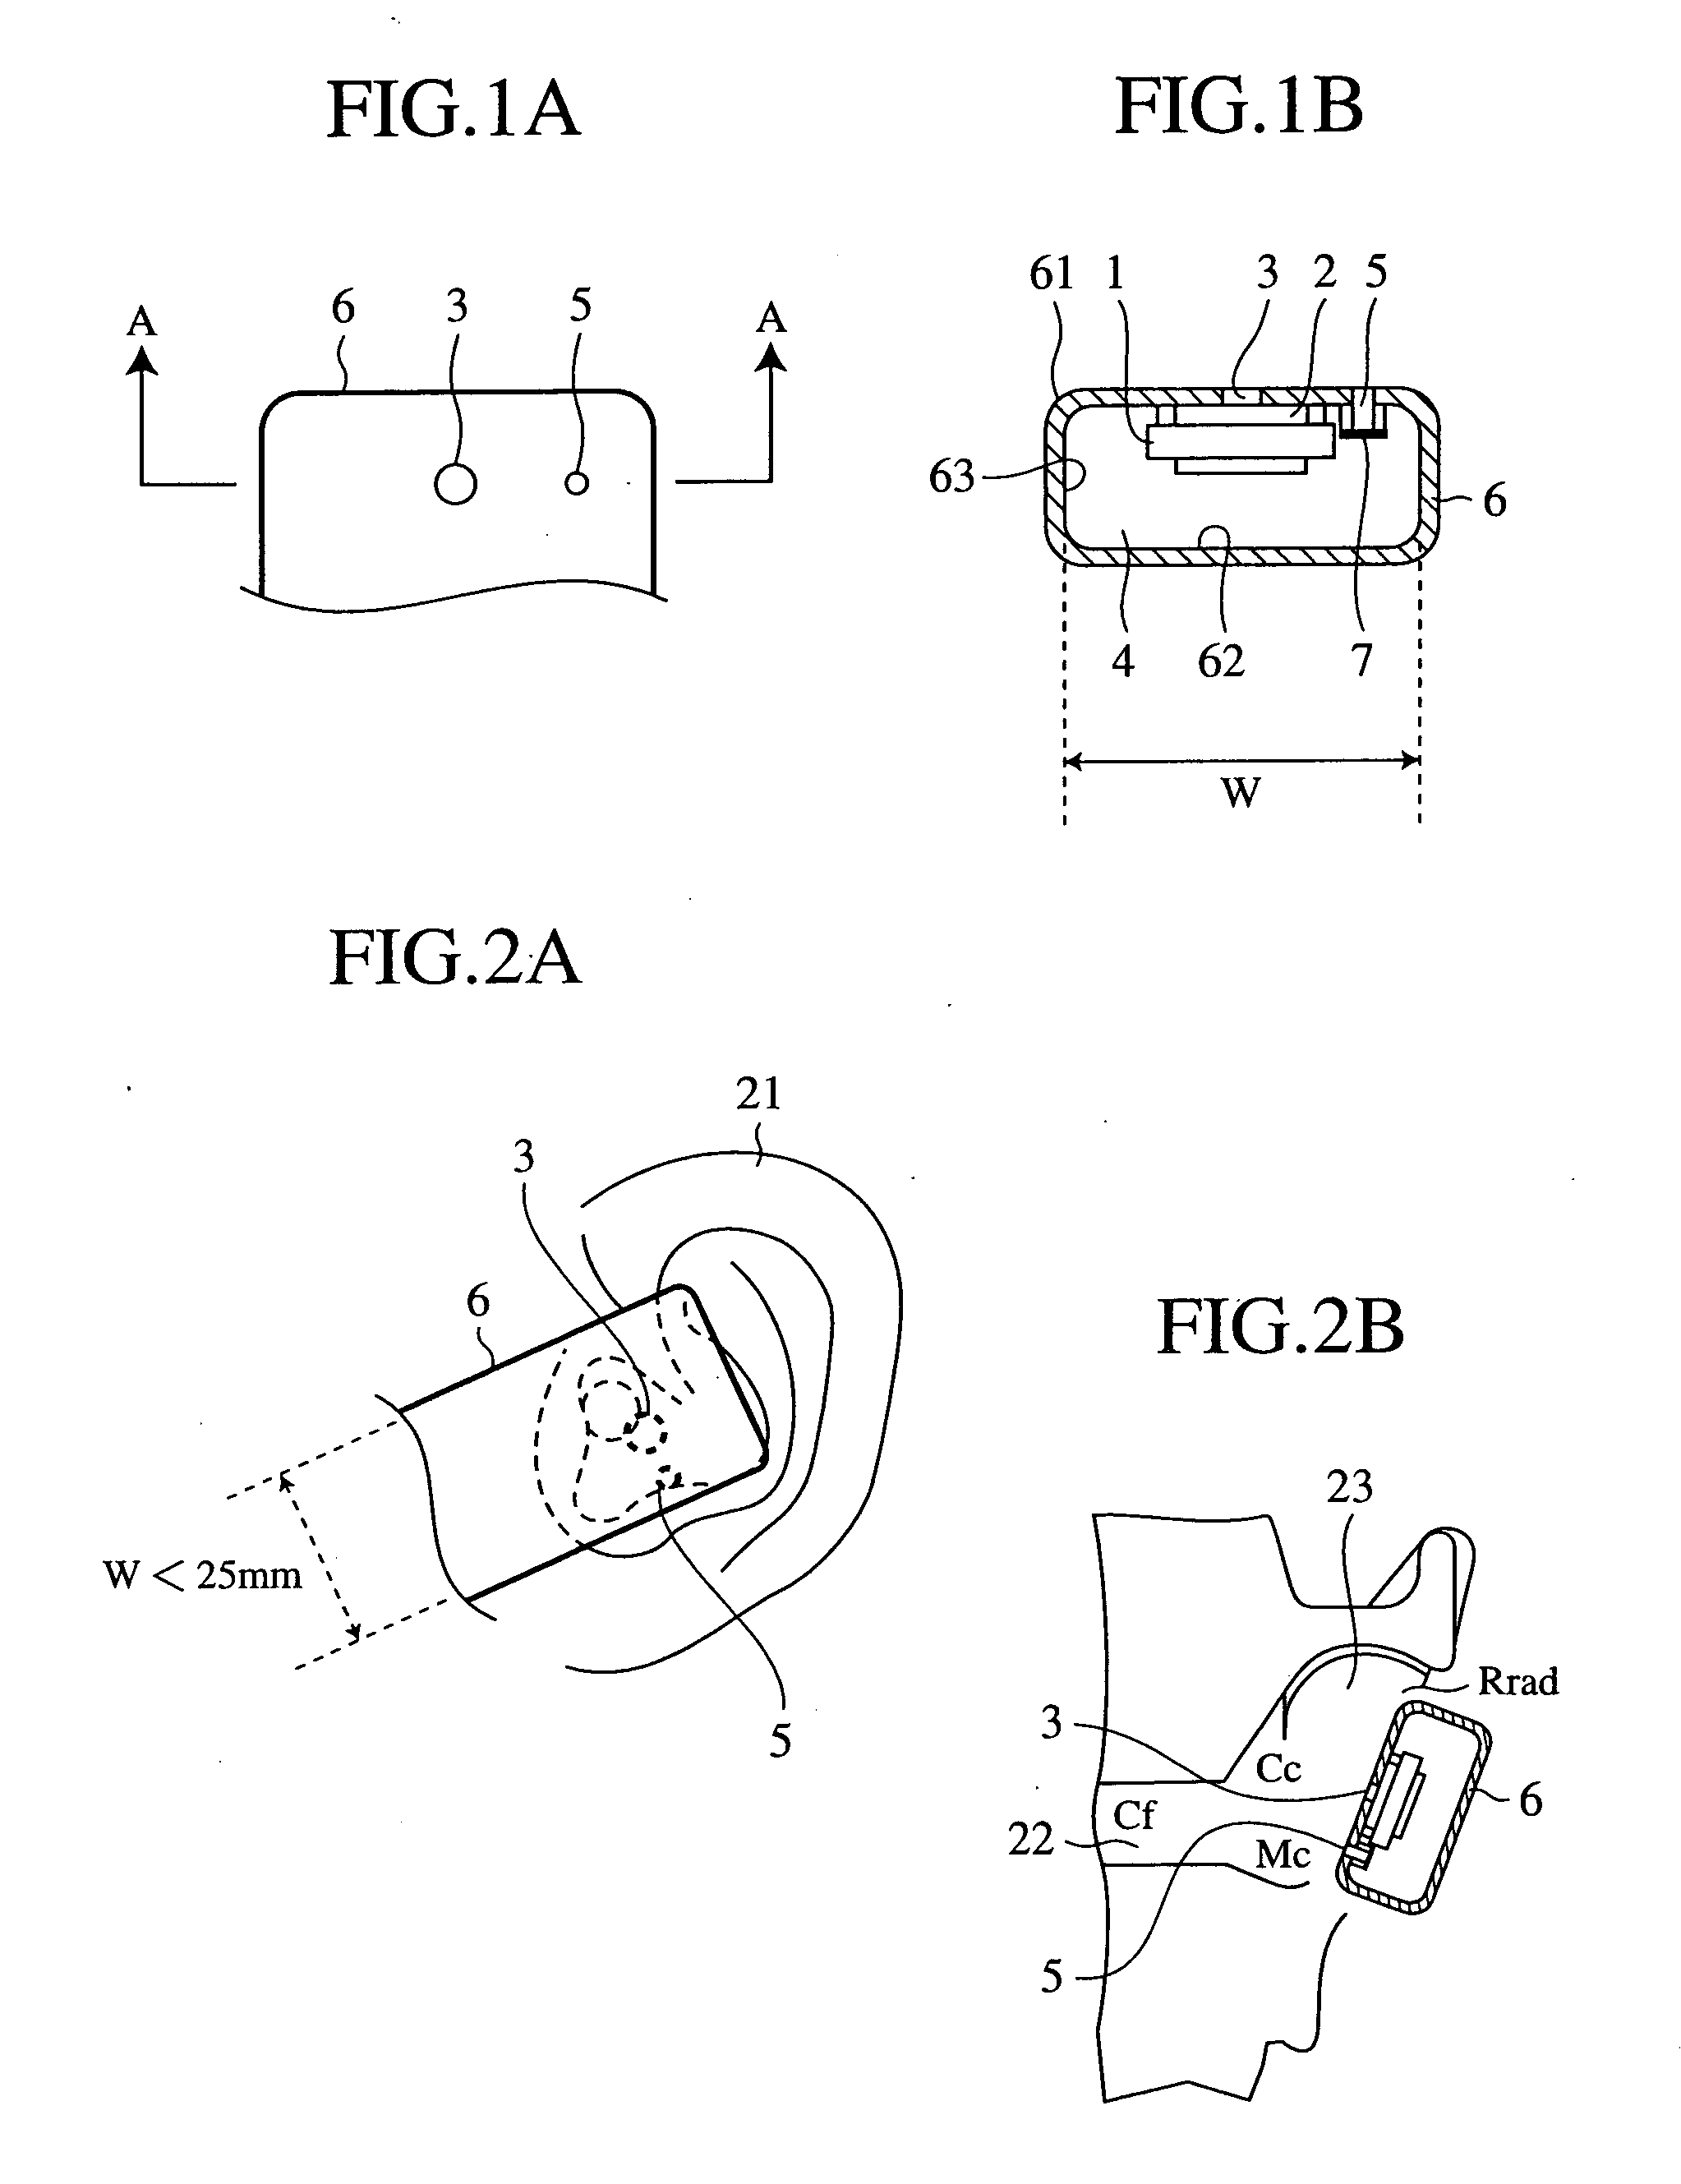 Portable accoustic apparatus